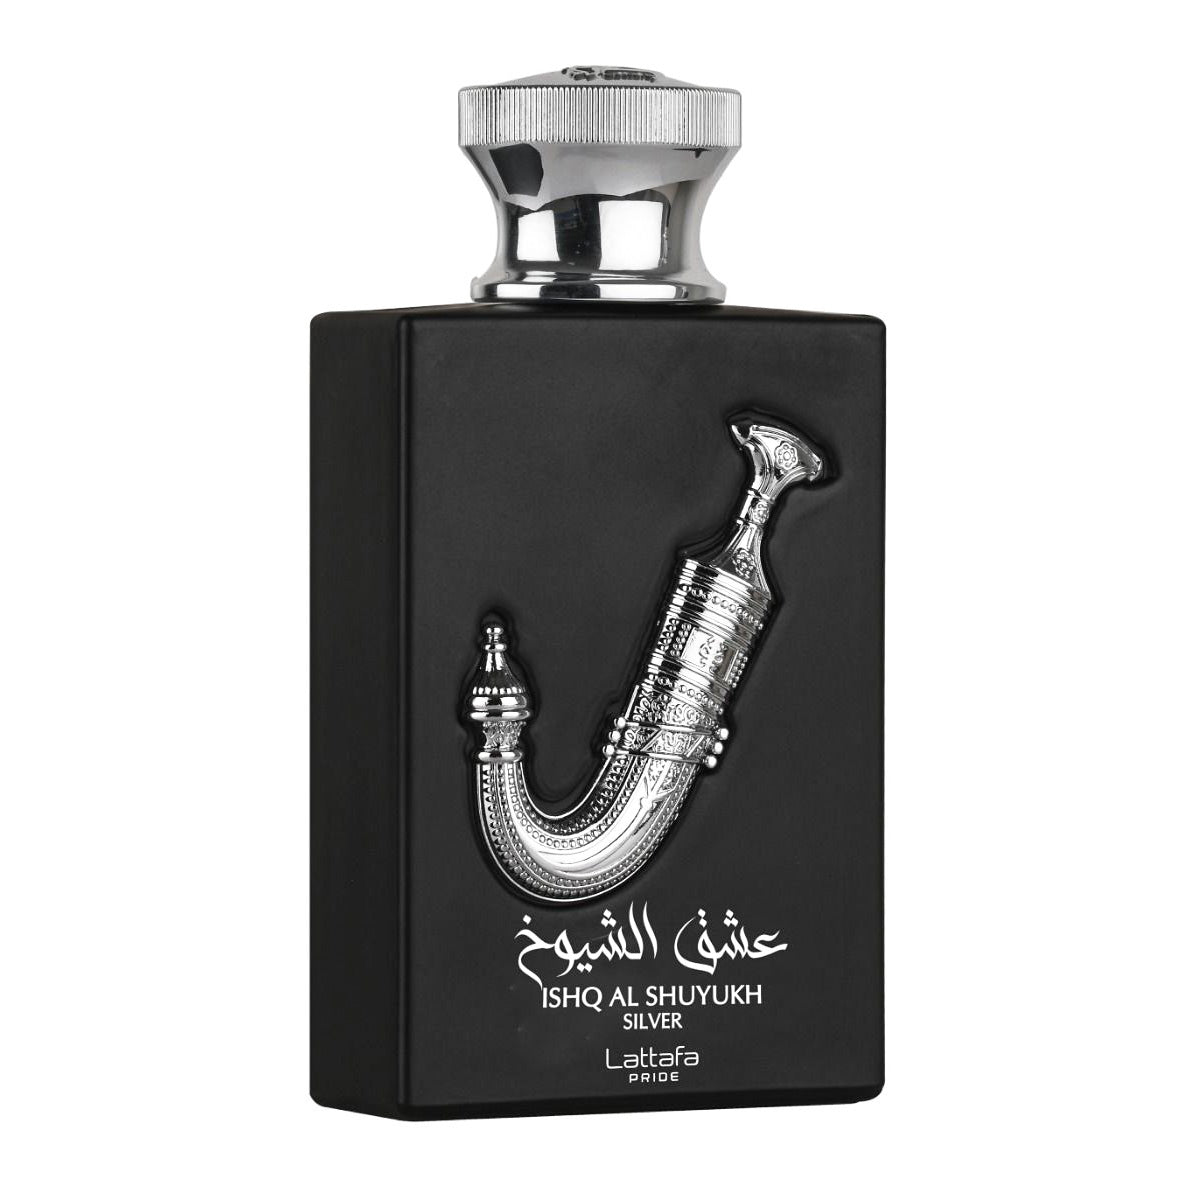 Ishq Al Shuyukh Silver Eau De Parfum 100ml Lattafa Pride-Perfume Heaven